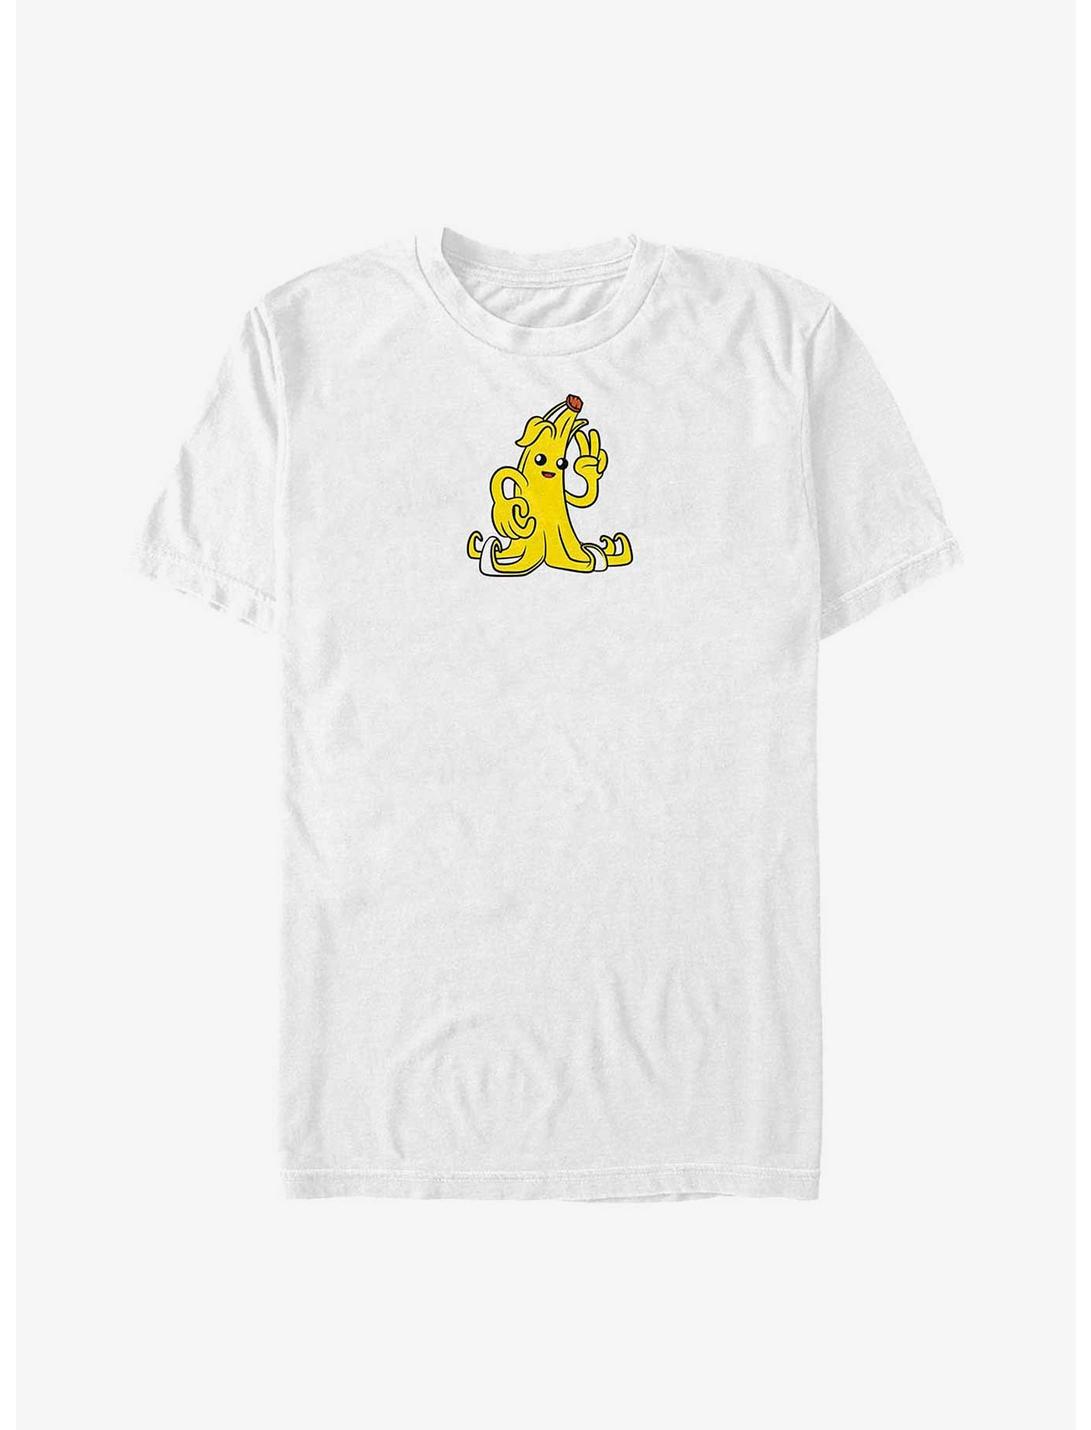 Fortnite Banana Peely Peace T-Shirt, WHITE, hi-res